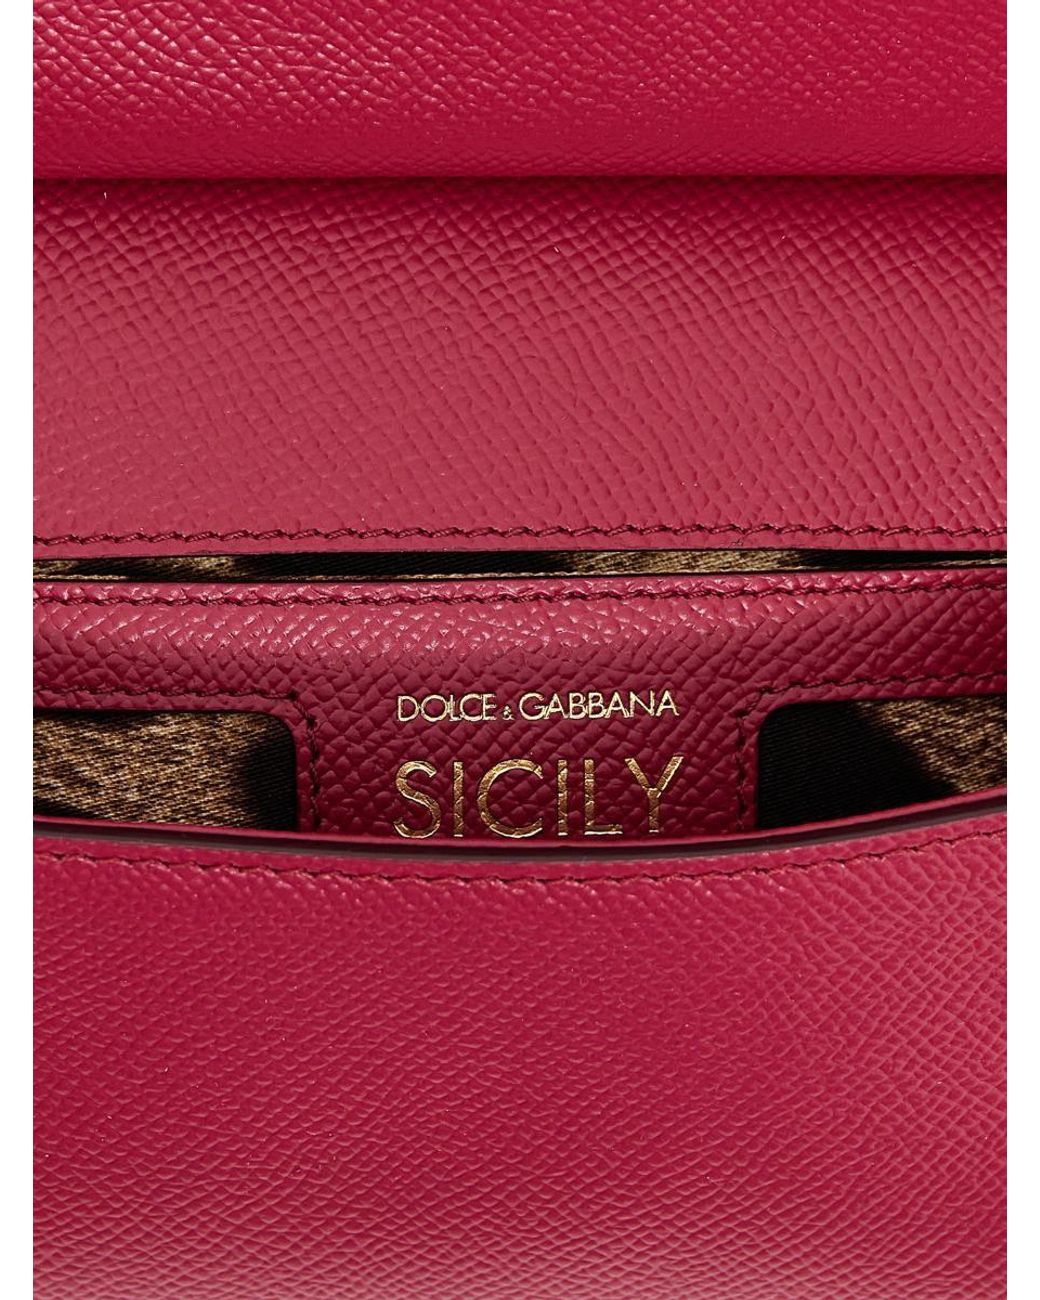 Bowling bags Dolce & Gabbana - Sicily medium dauphine leather bag